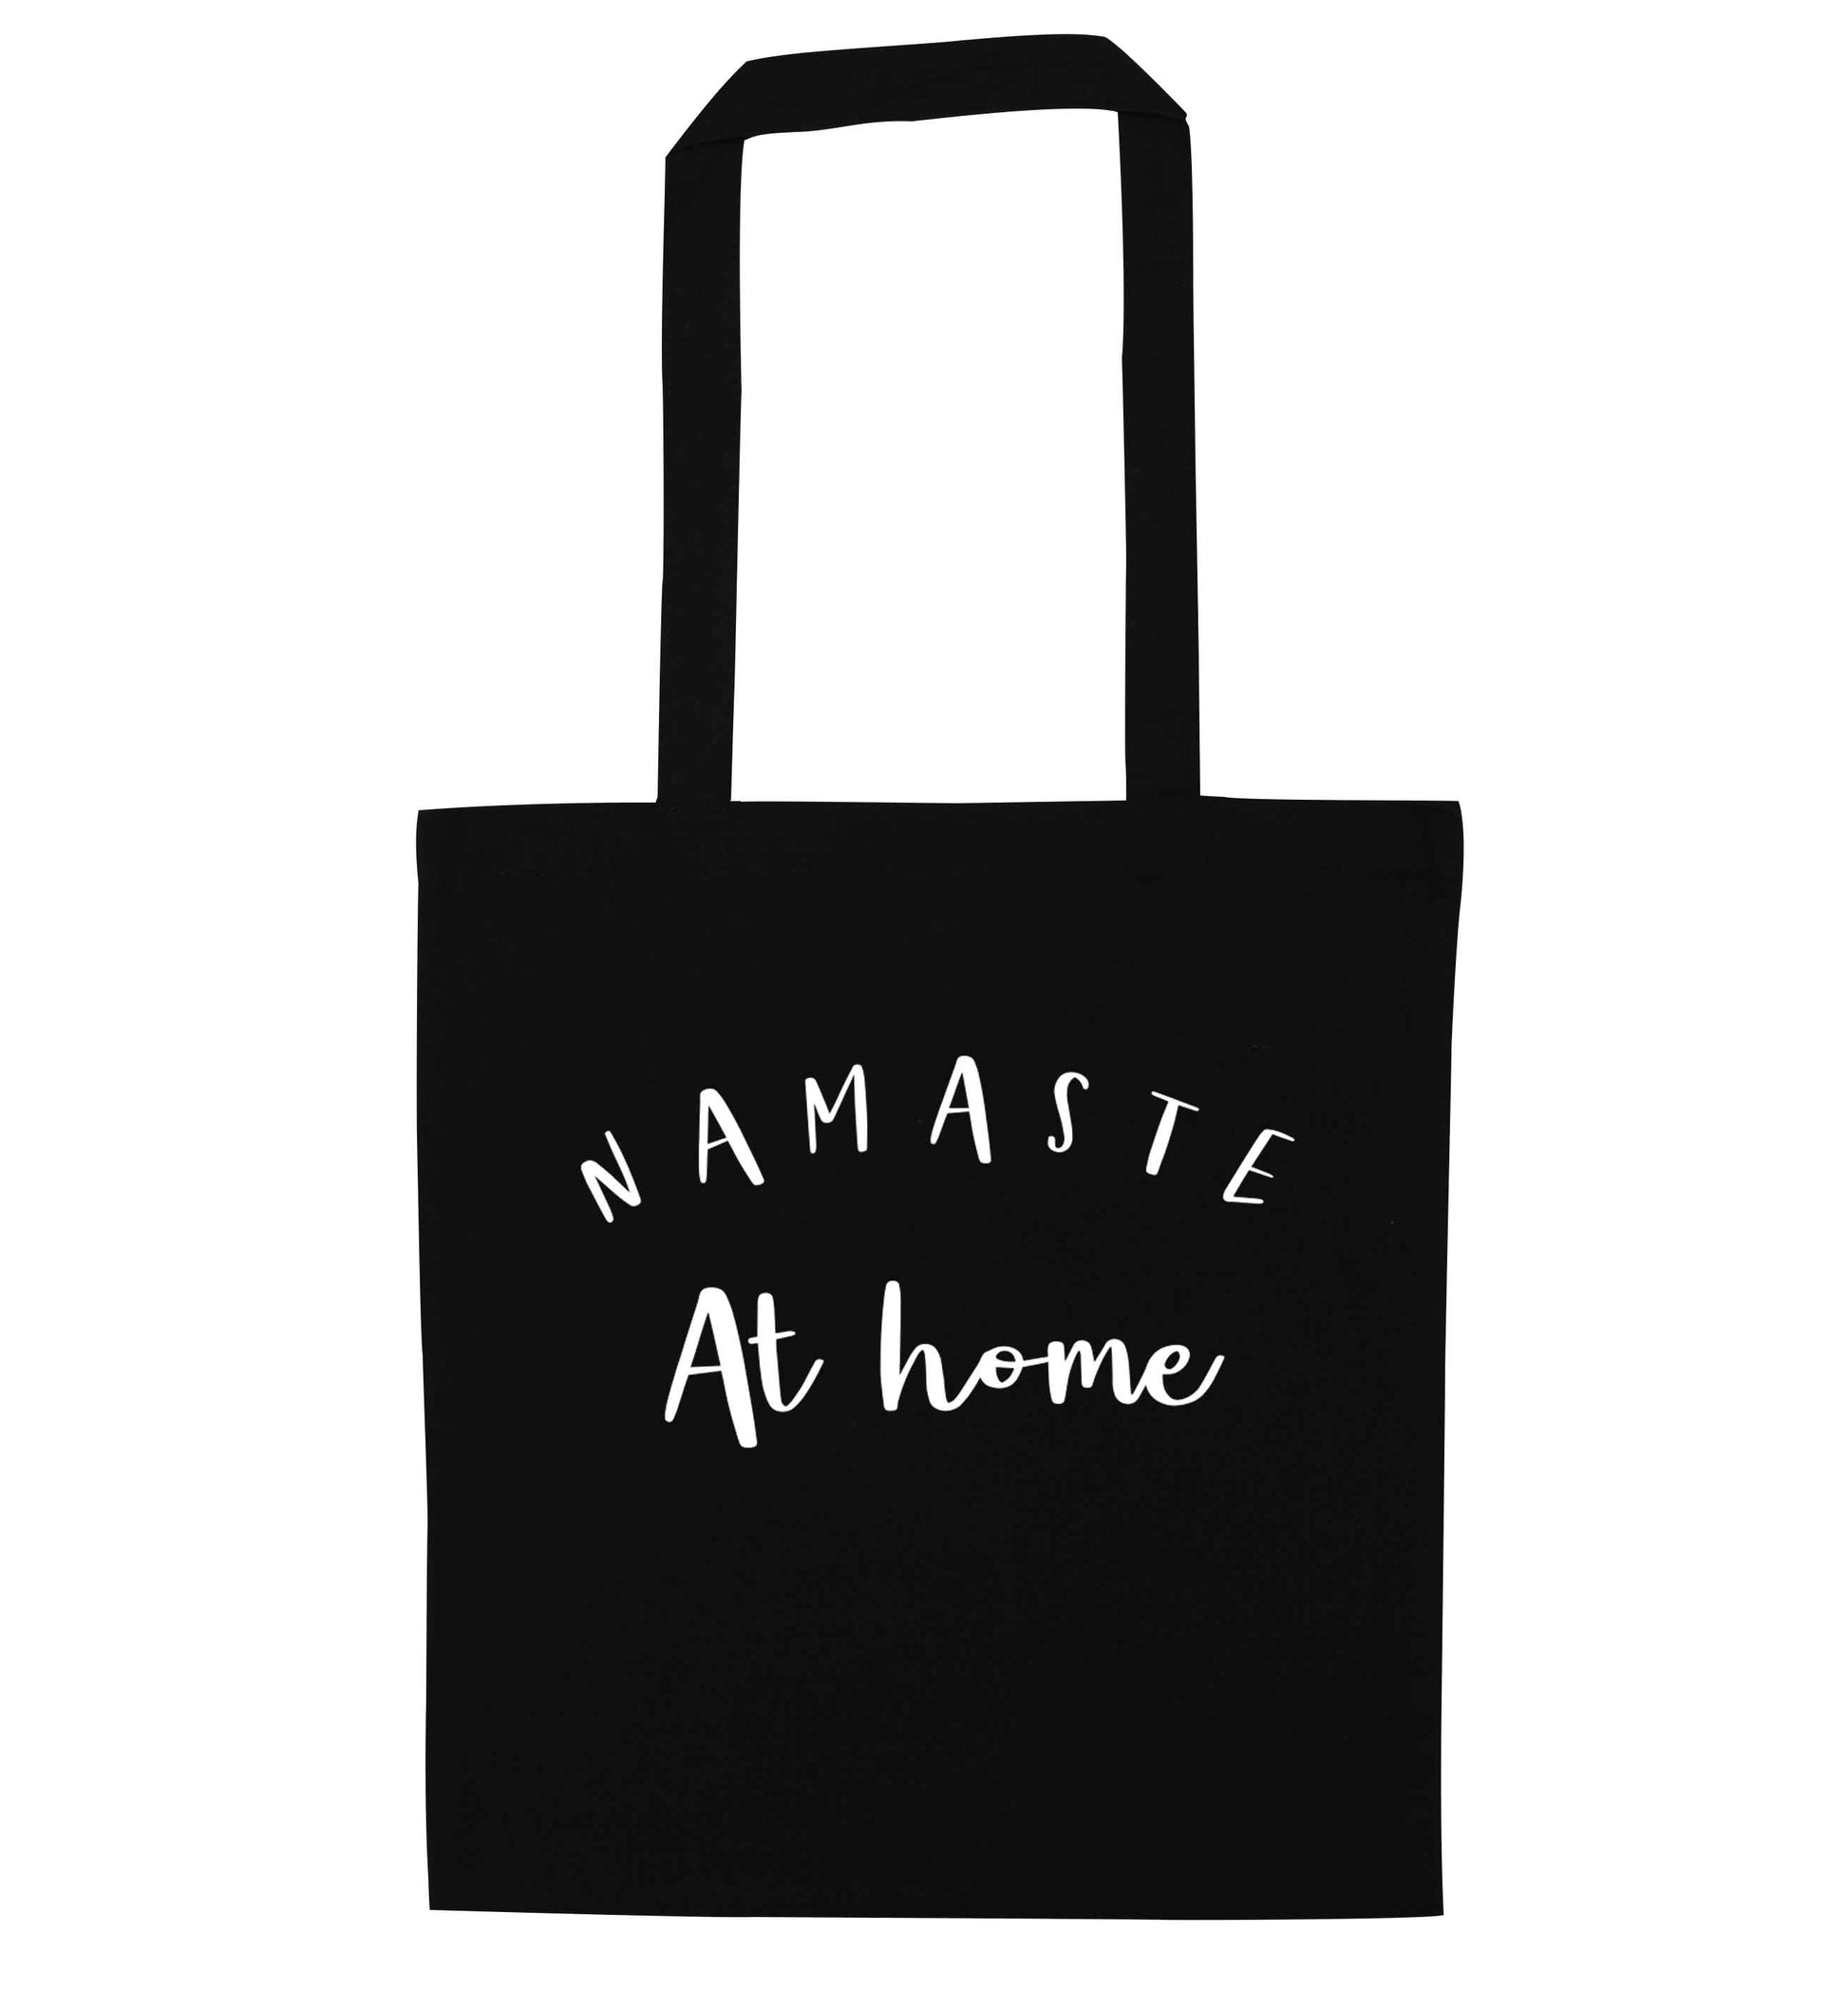 Namaste at home black tote bag